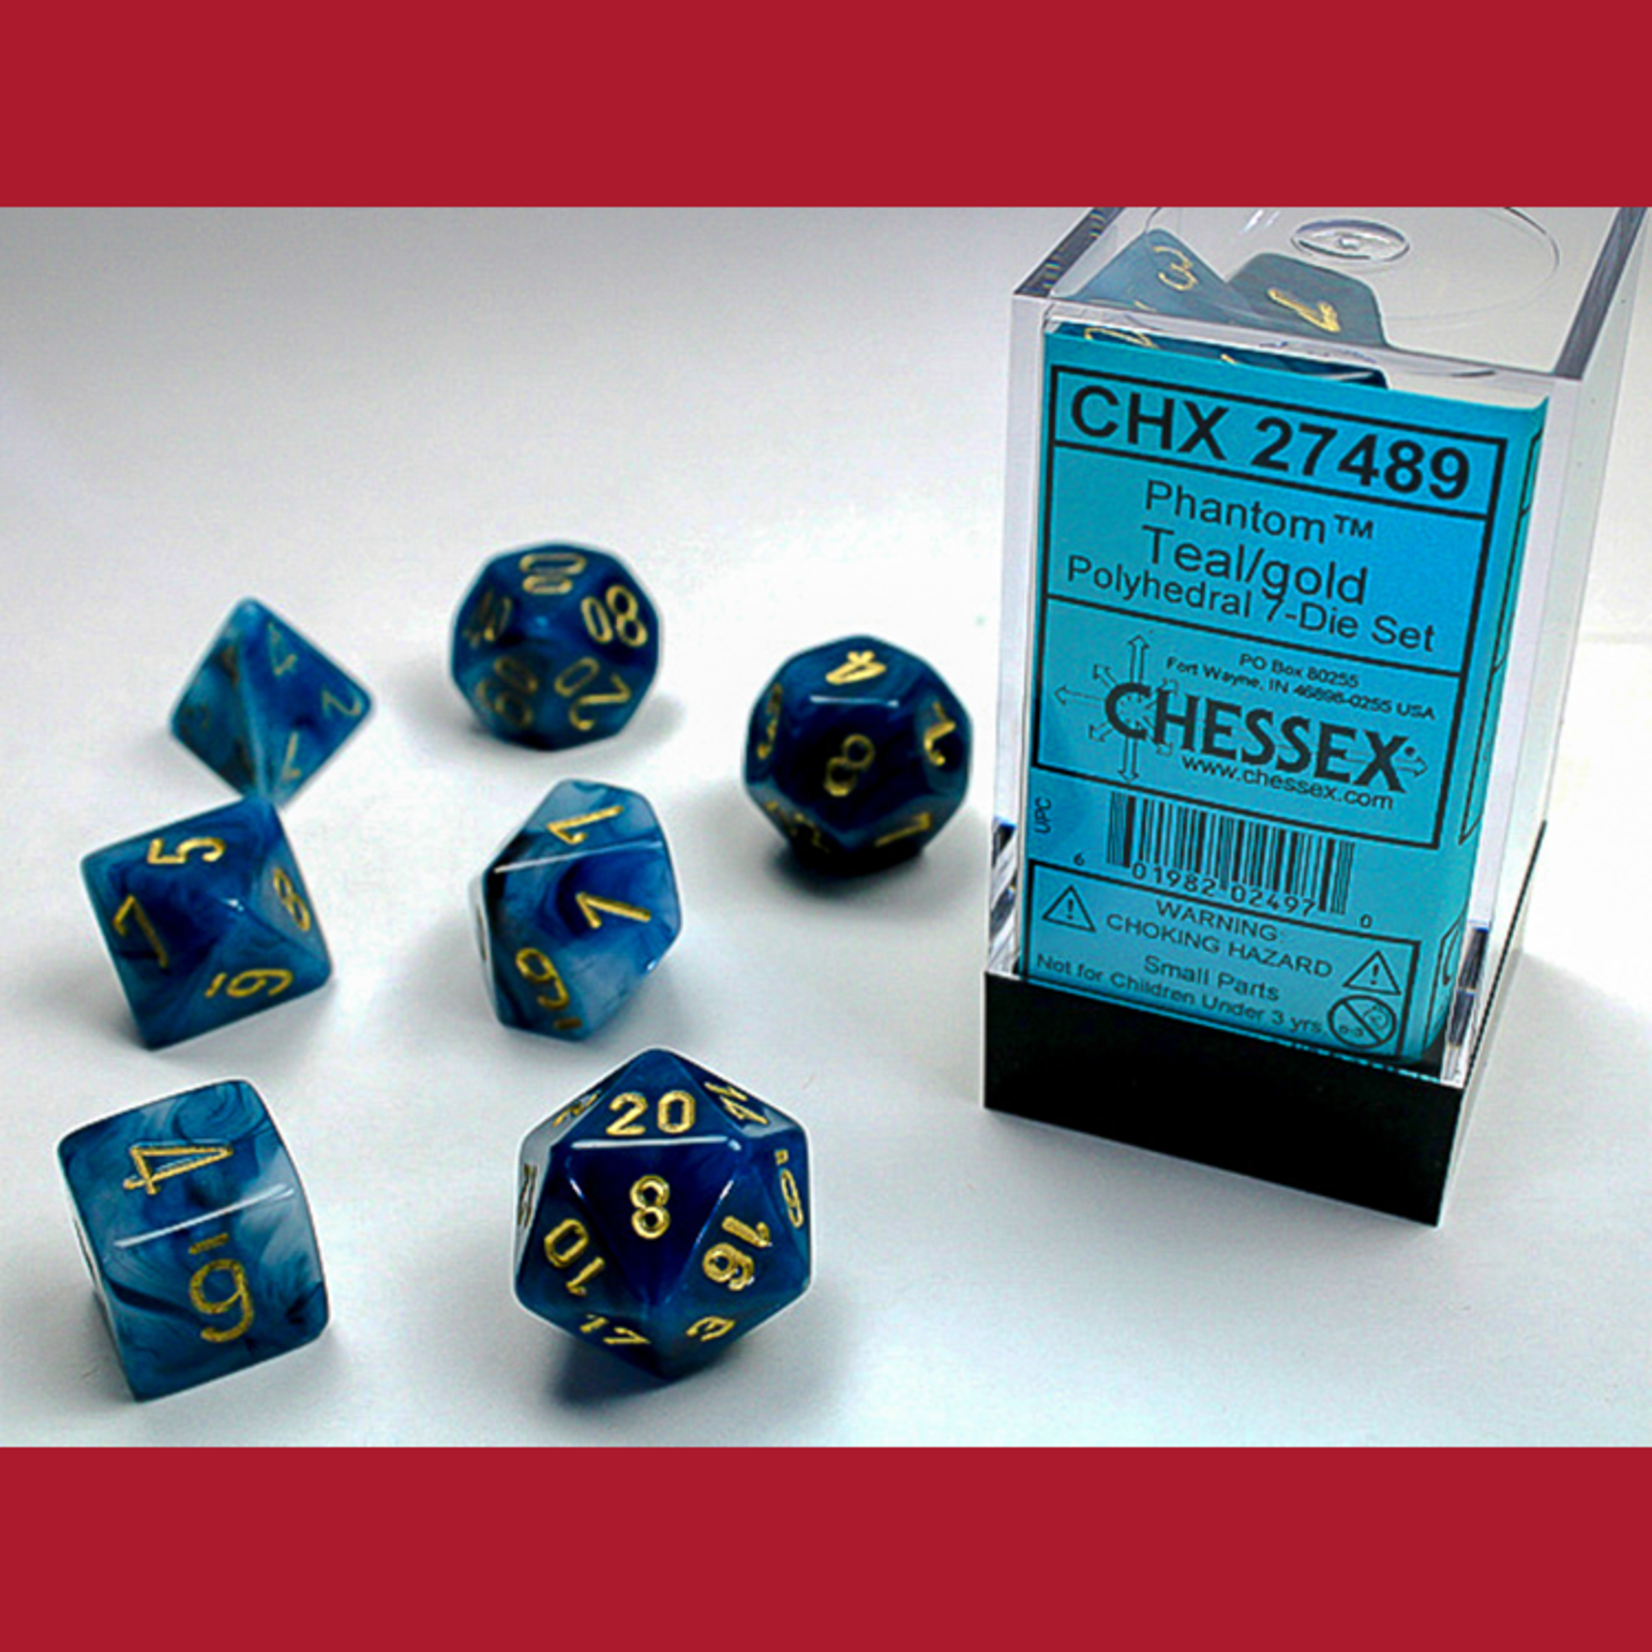 Chessex CHX 27489 Phantom Teal / Gold Polyhedral 7-die Set